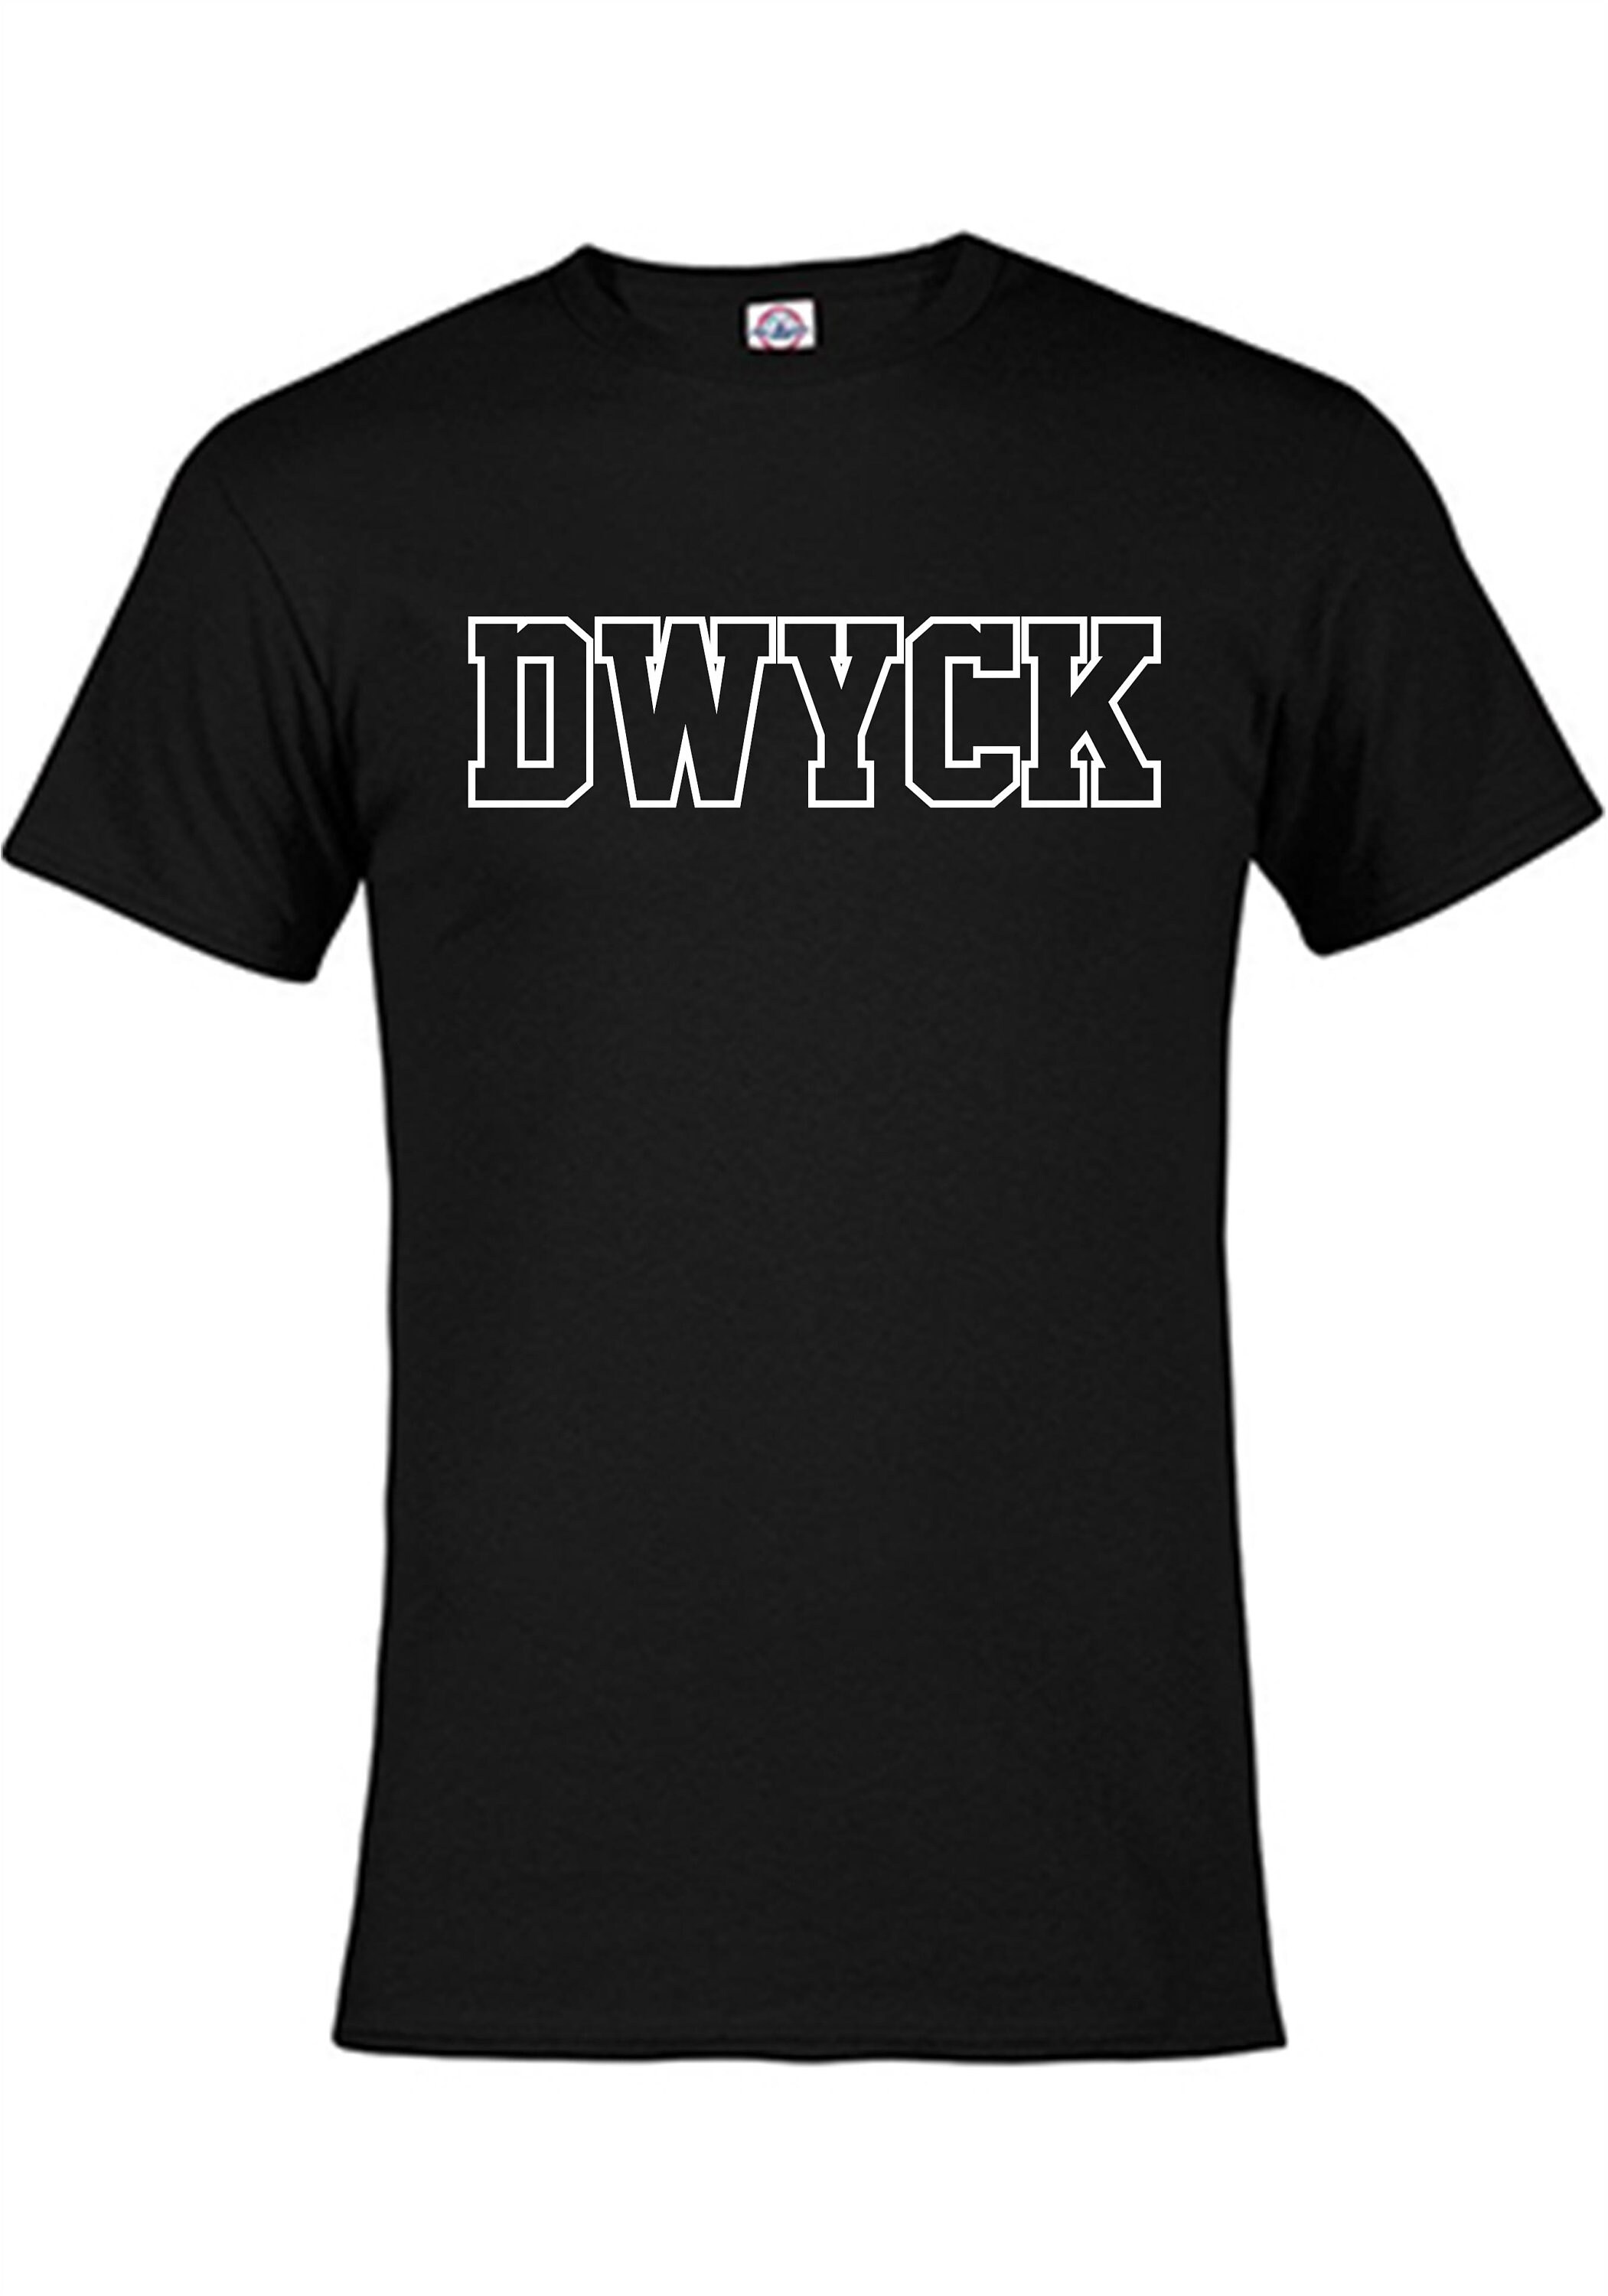 Dwyck Gang Starr Guru New York Rap Hip Hop Shirt Culture Love Etsy UK